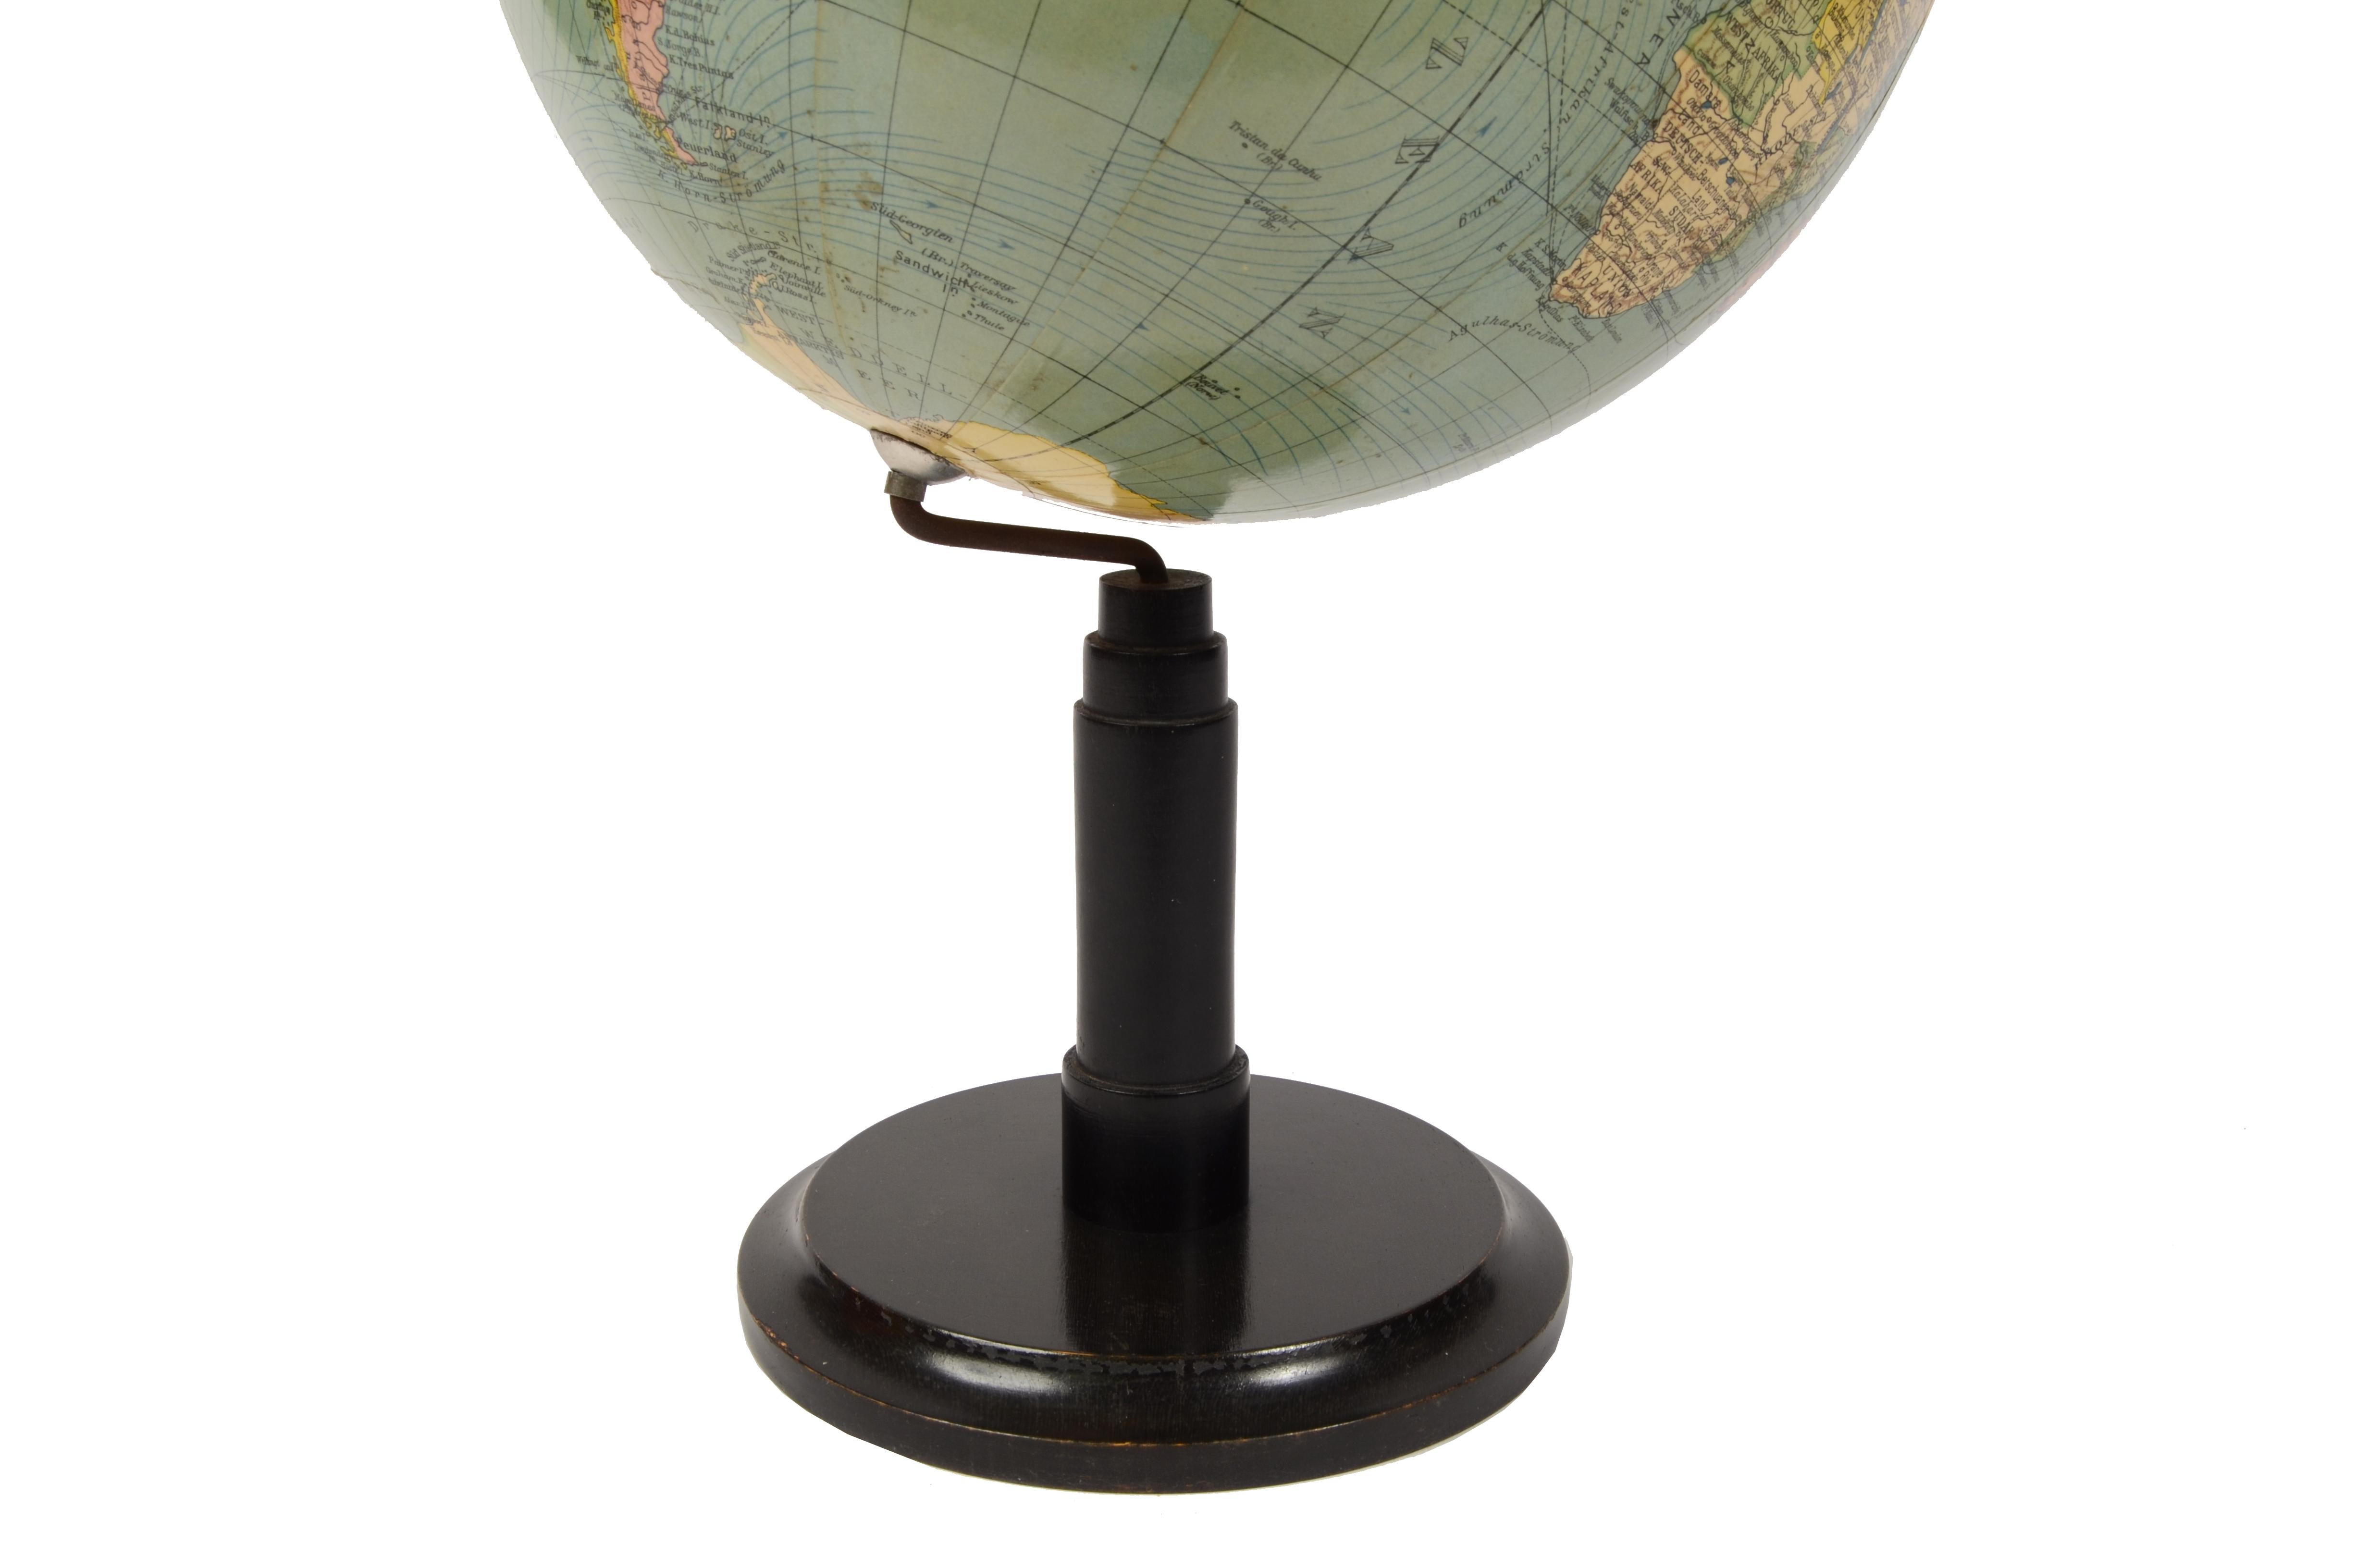 1940s German Columbus Erdglobus Terrestrial Globe by Cartographer C. Luther 10